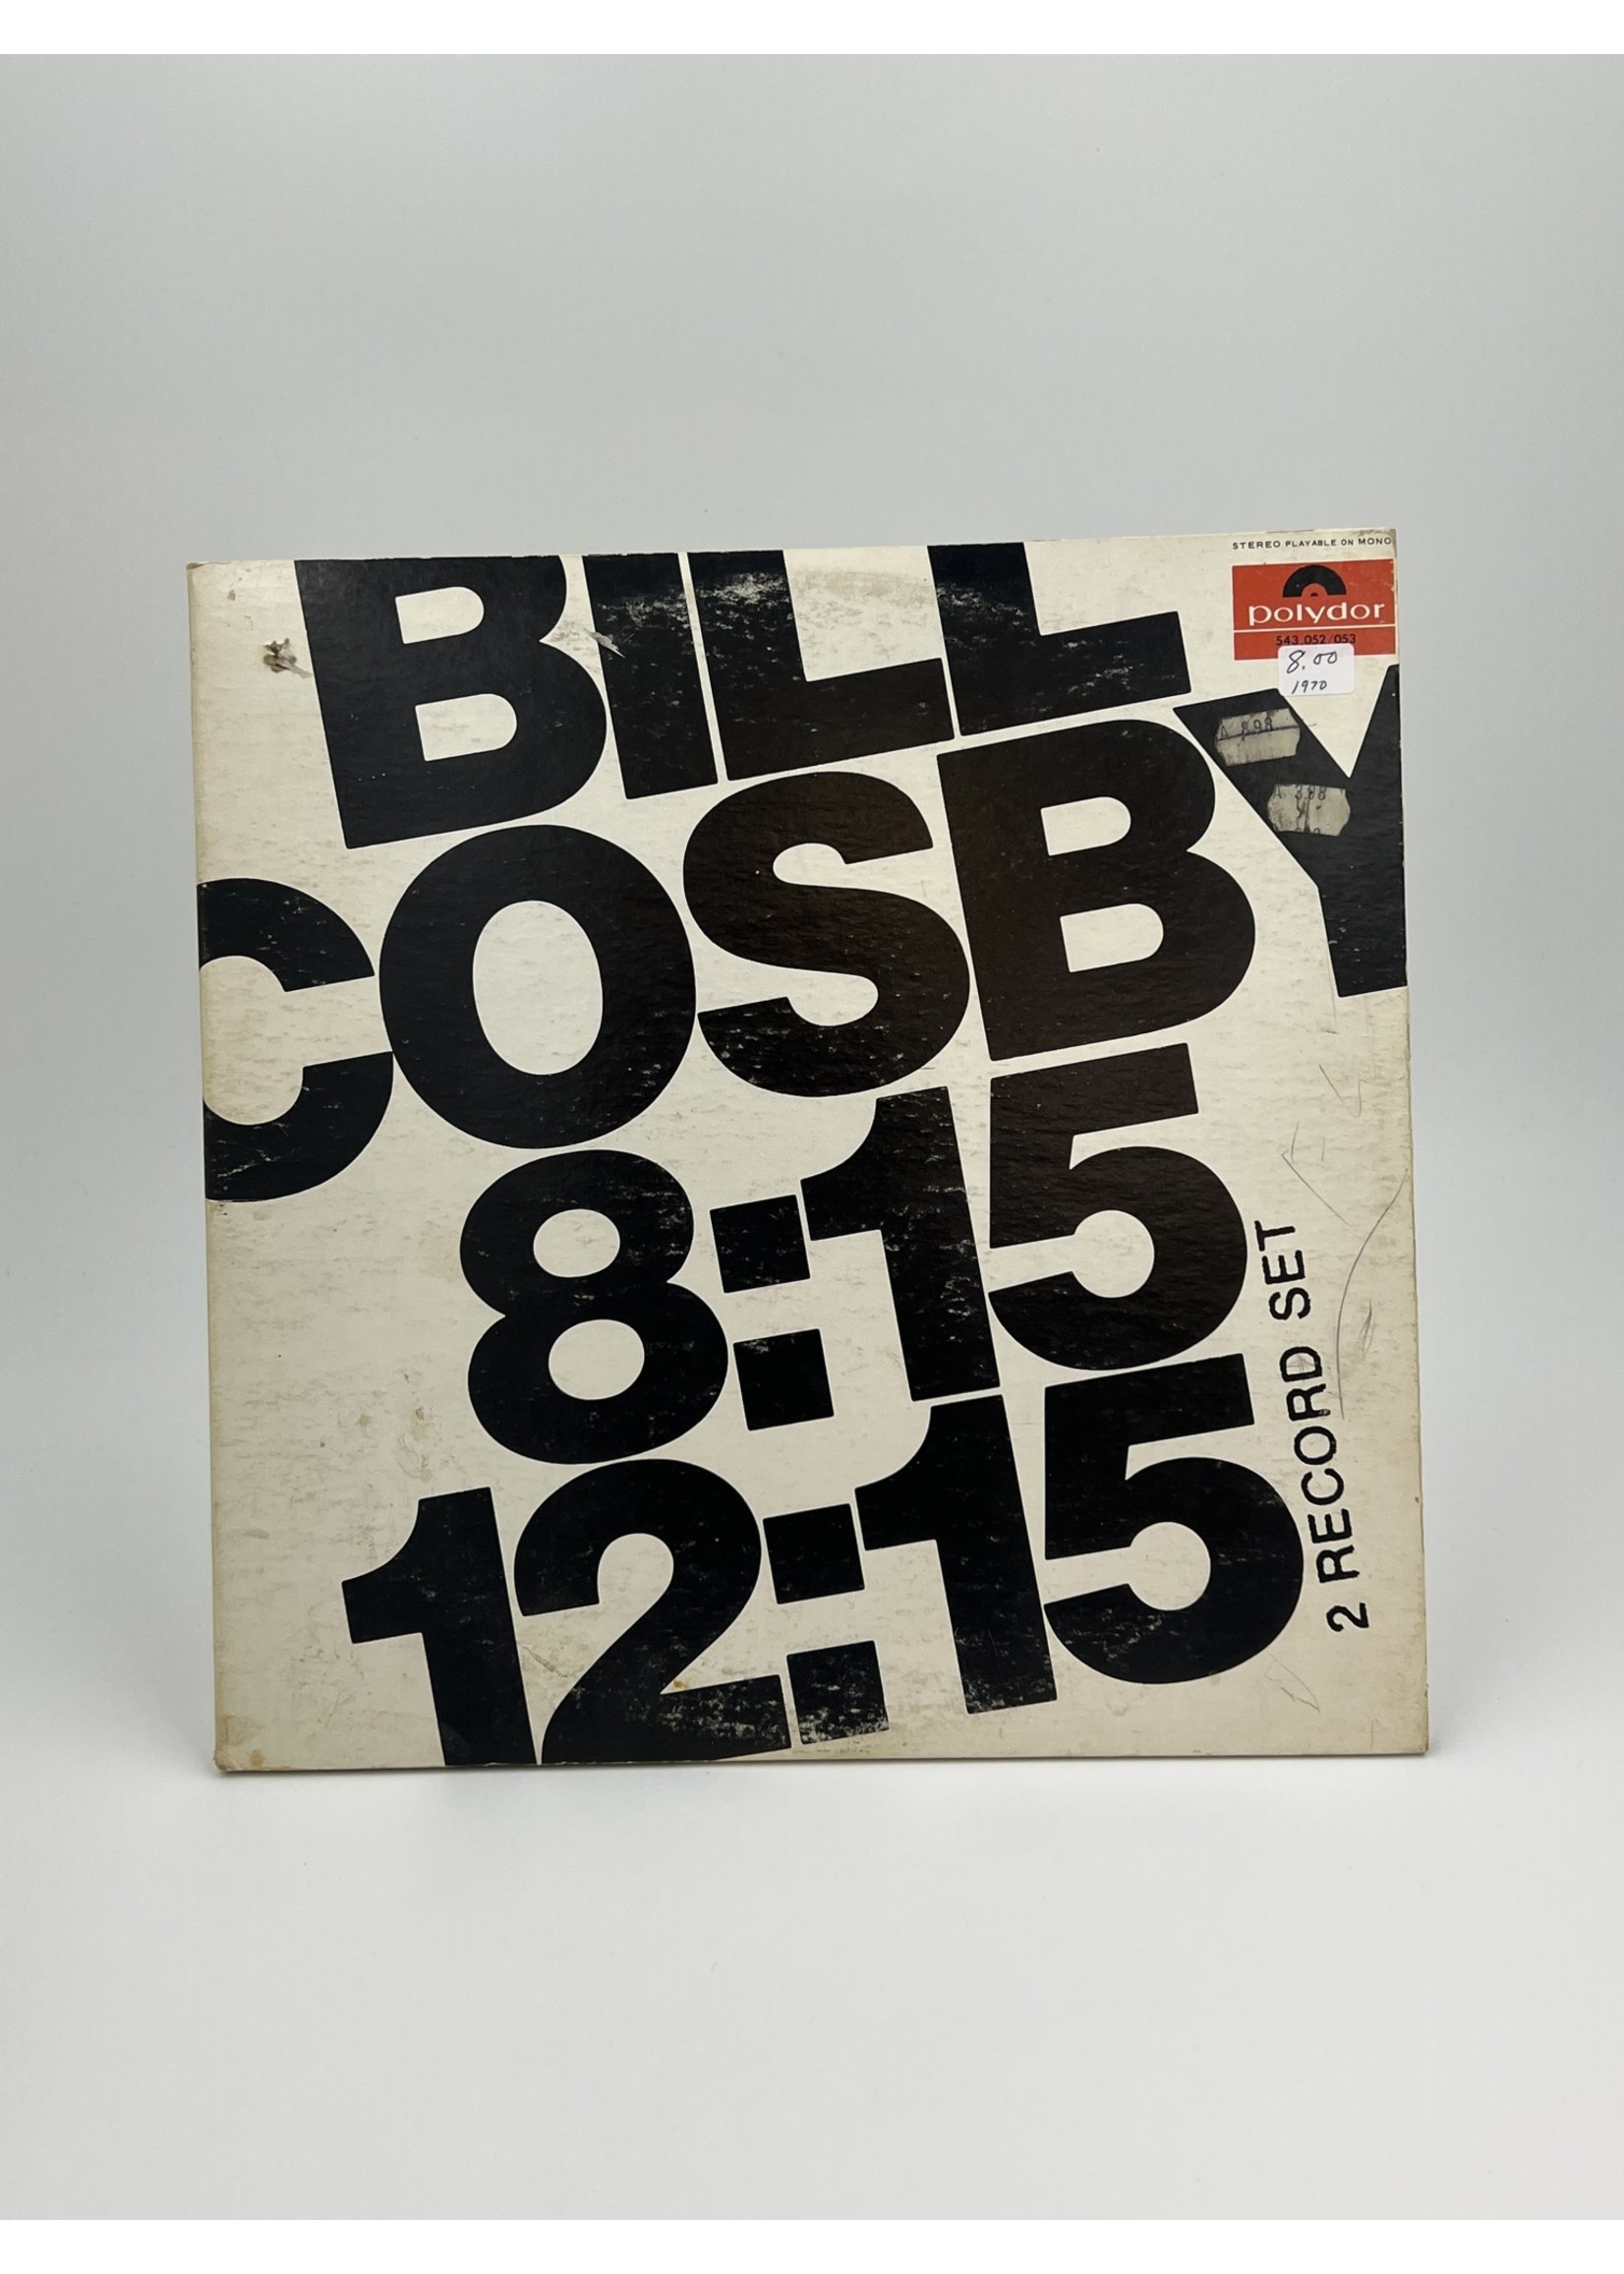 LP Bill Cosby 815 1215 LP 2 Record